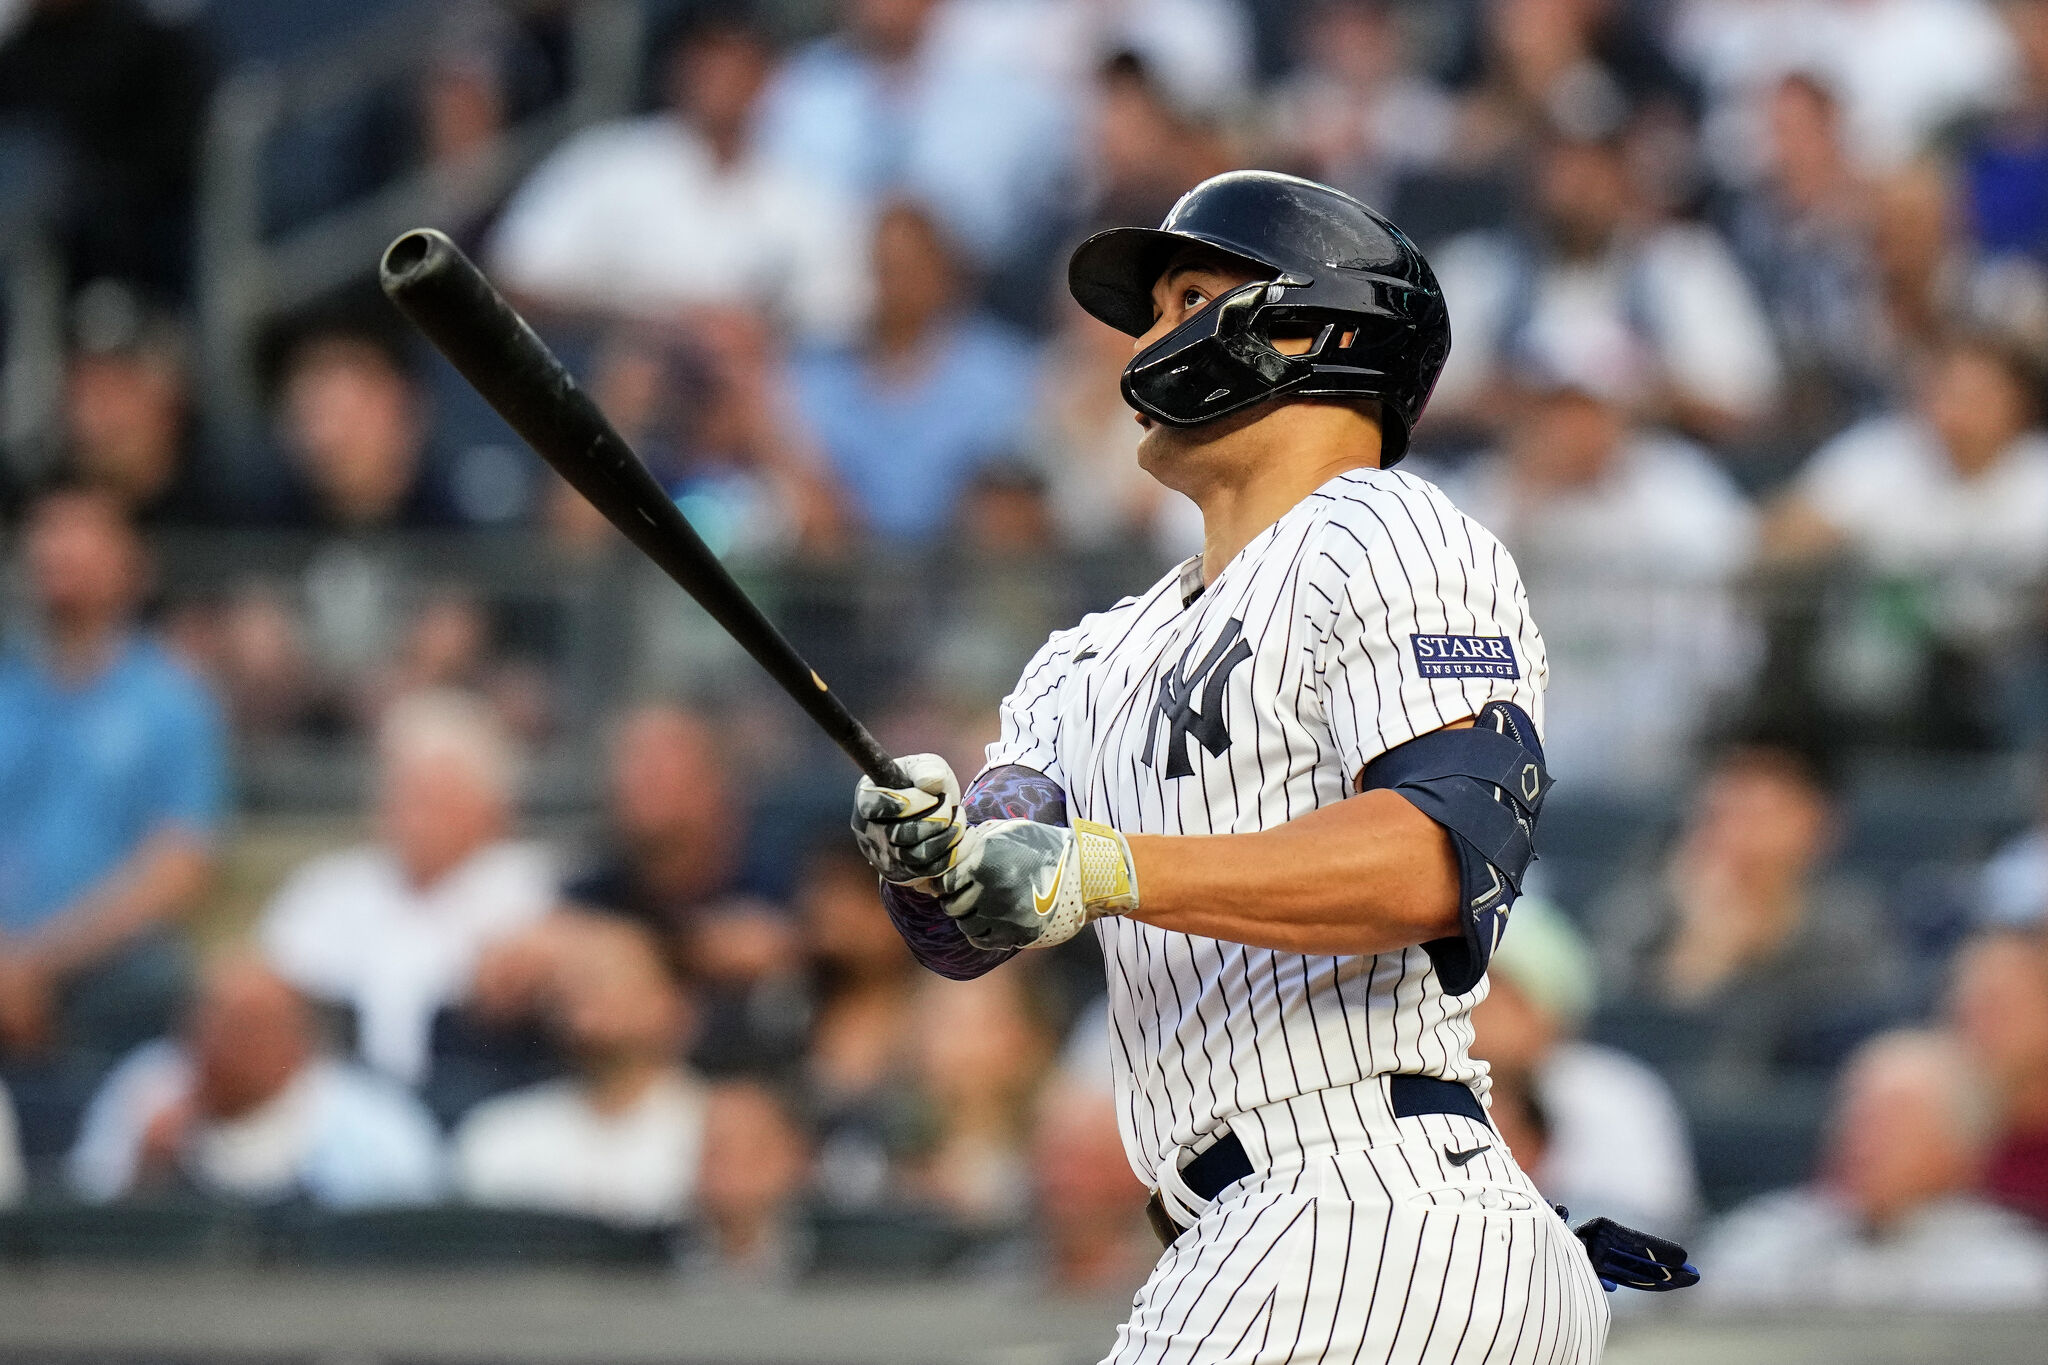 Home Run King Giancarlo Stanton Joins New York Yankees